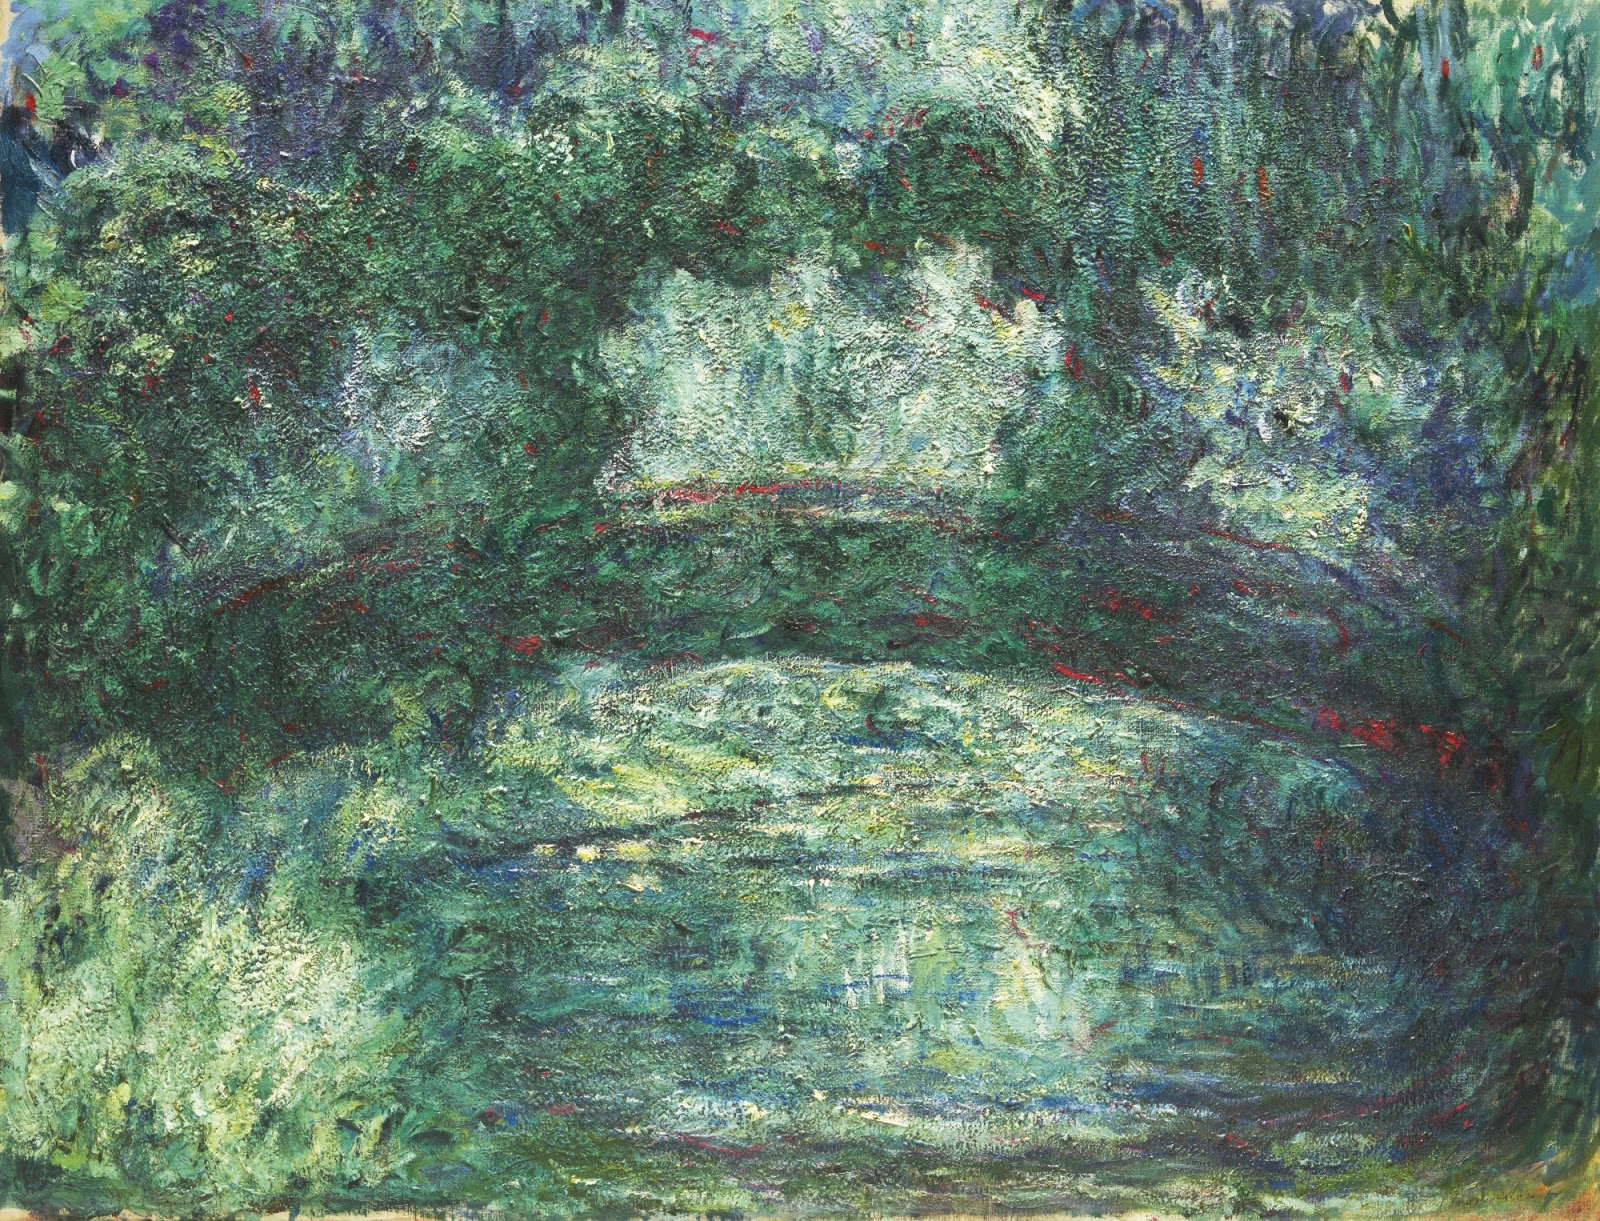 Claude+Monet-1840-1926 (454).jpg